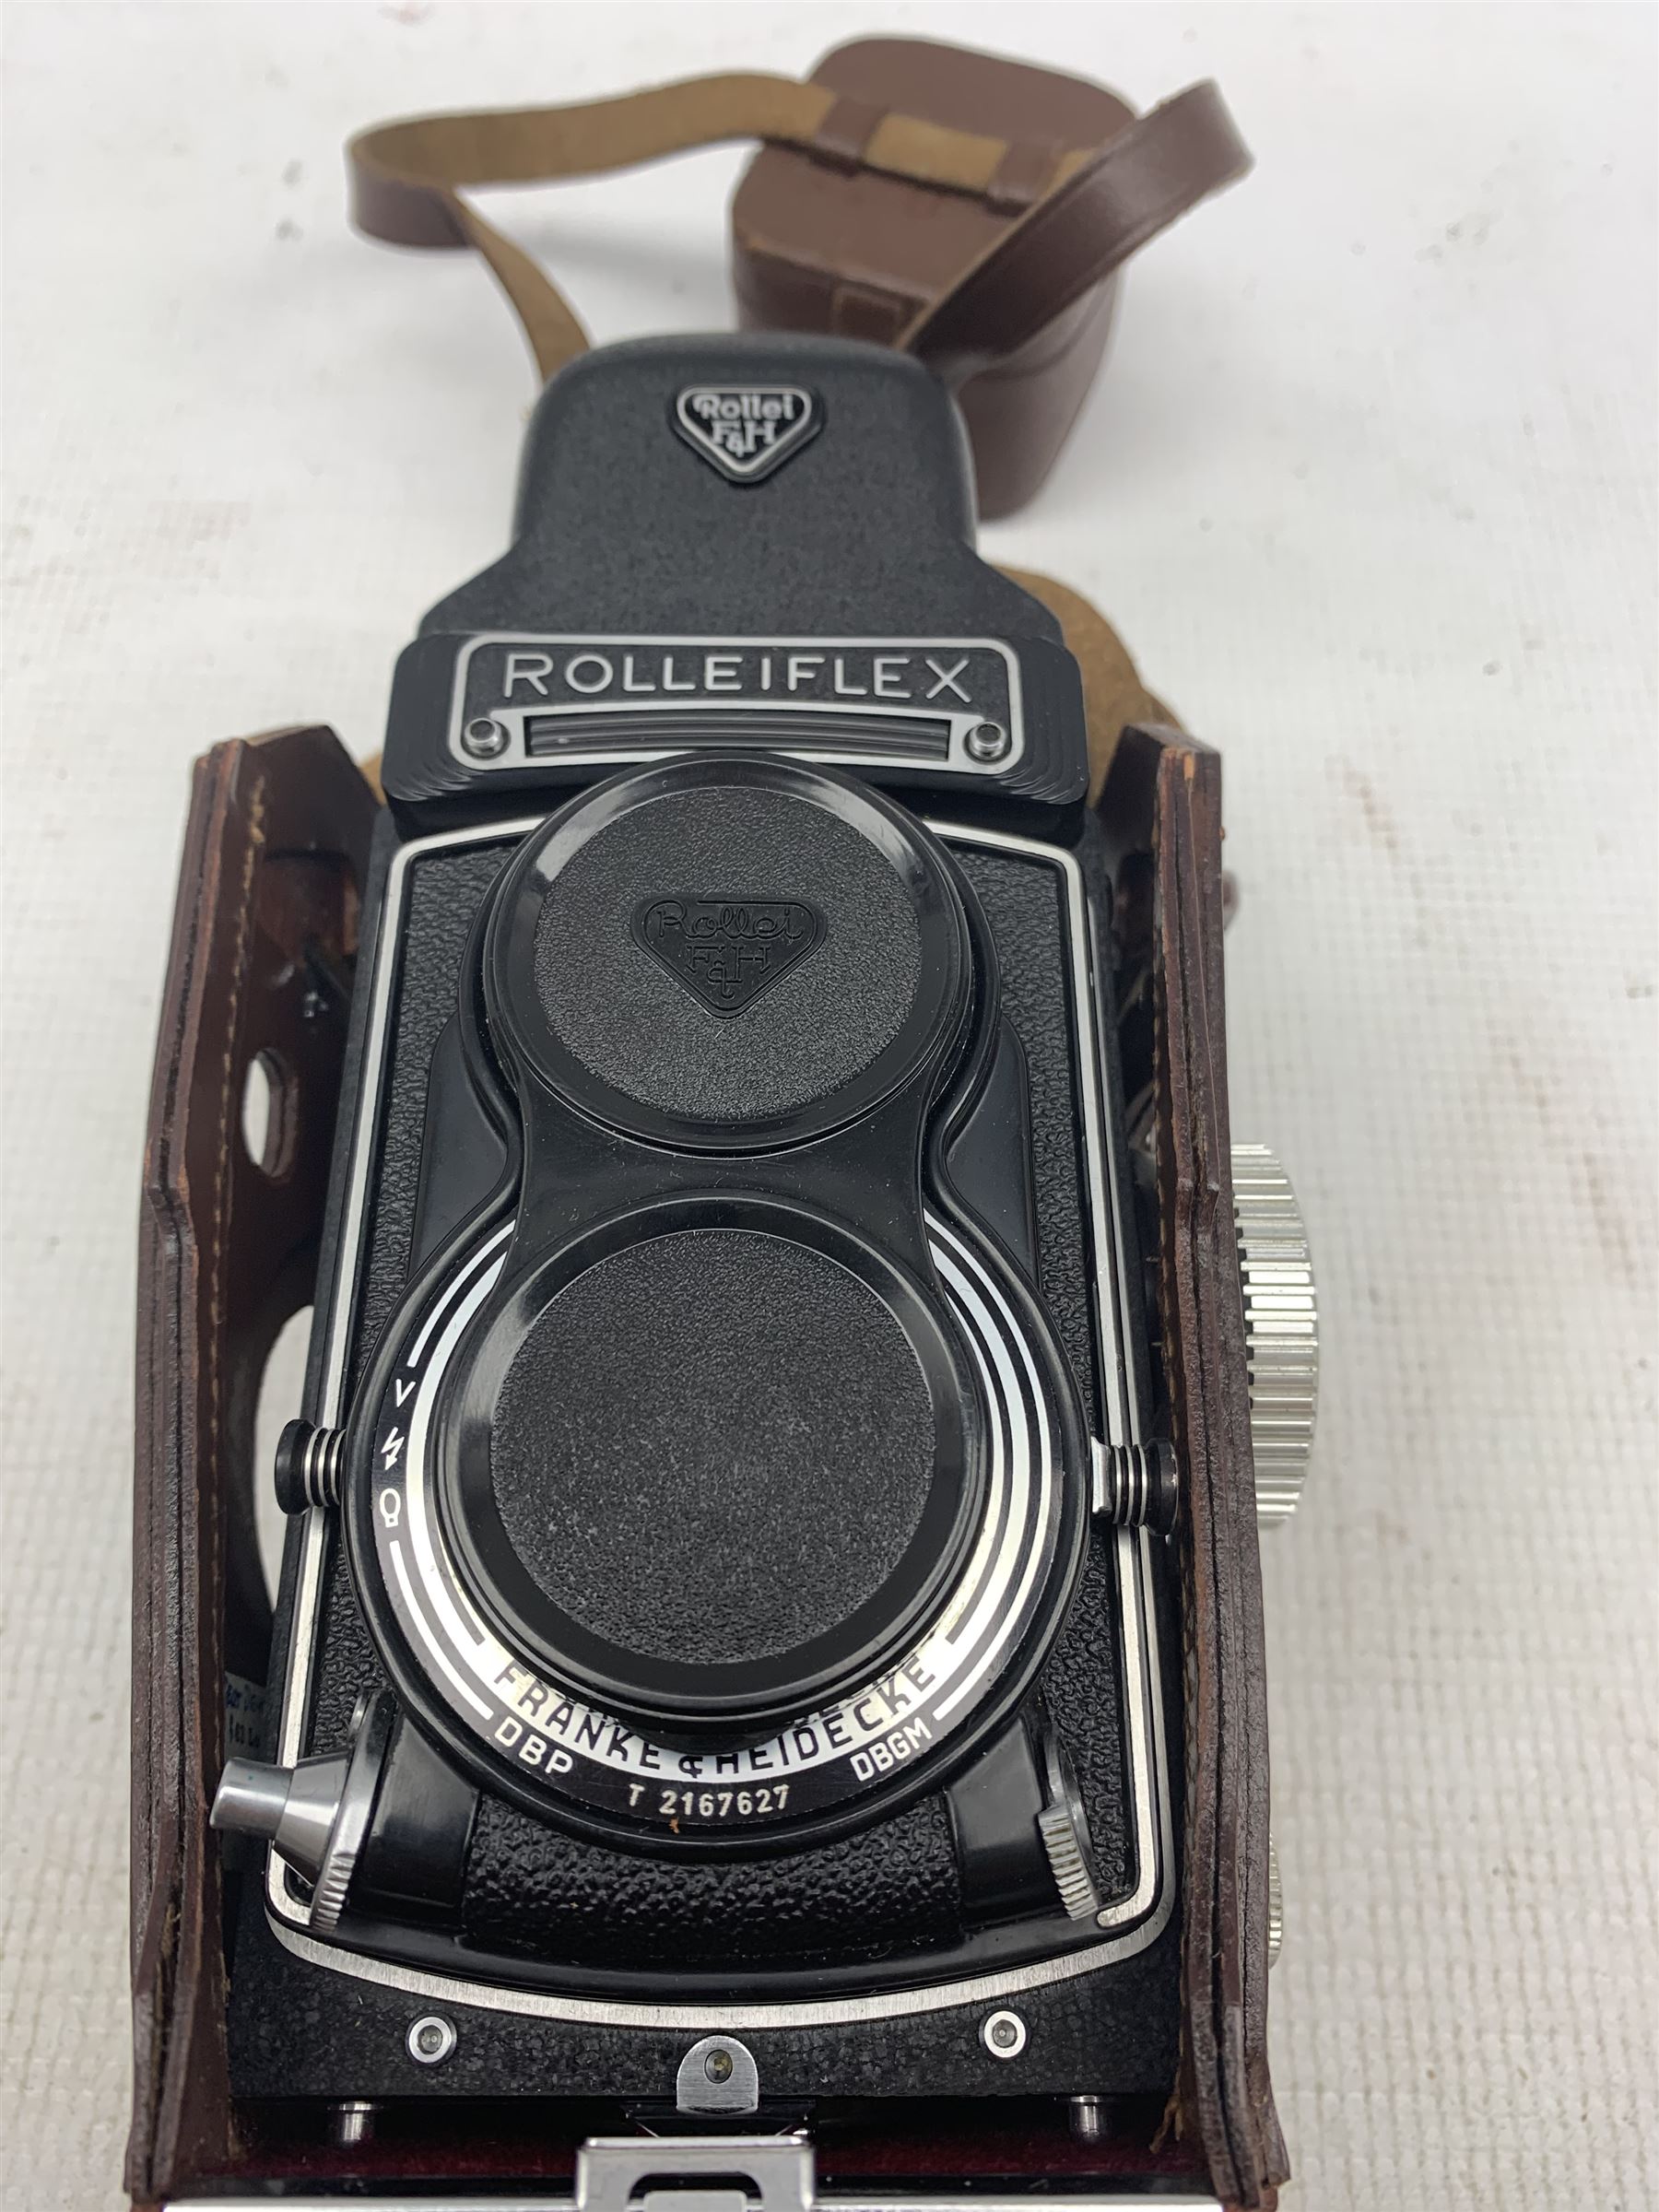 Rolleiflex camera 'T 2167627' - Image 2 of 4